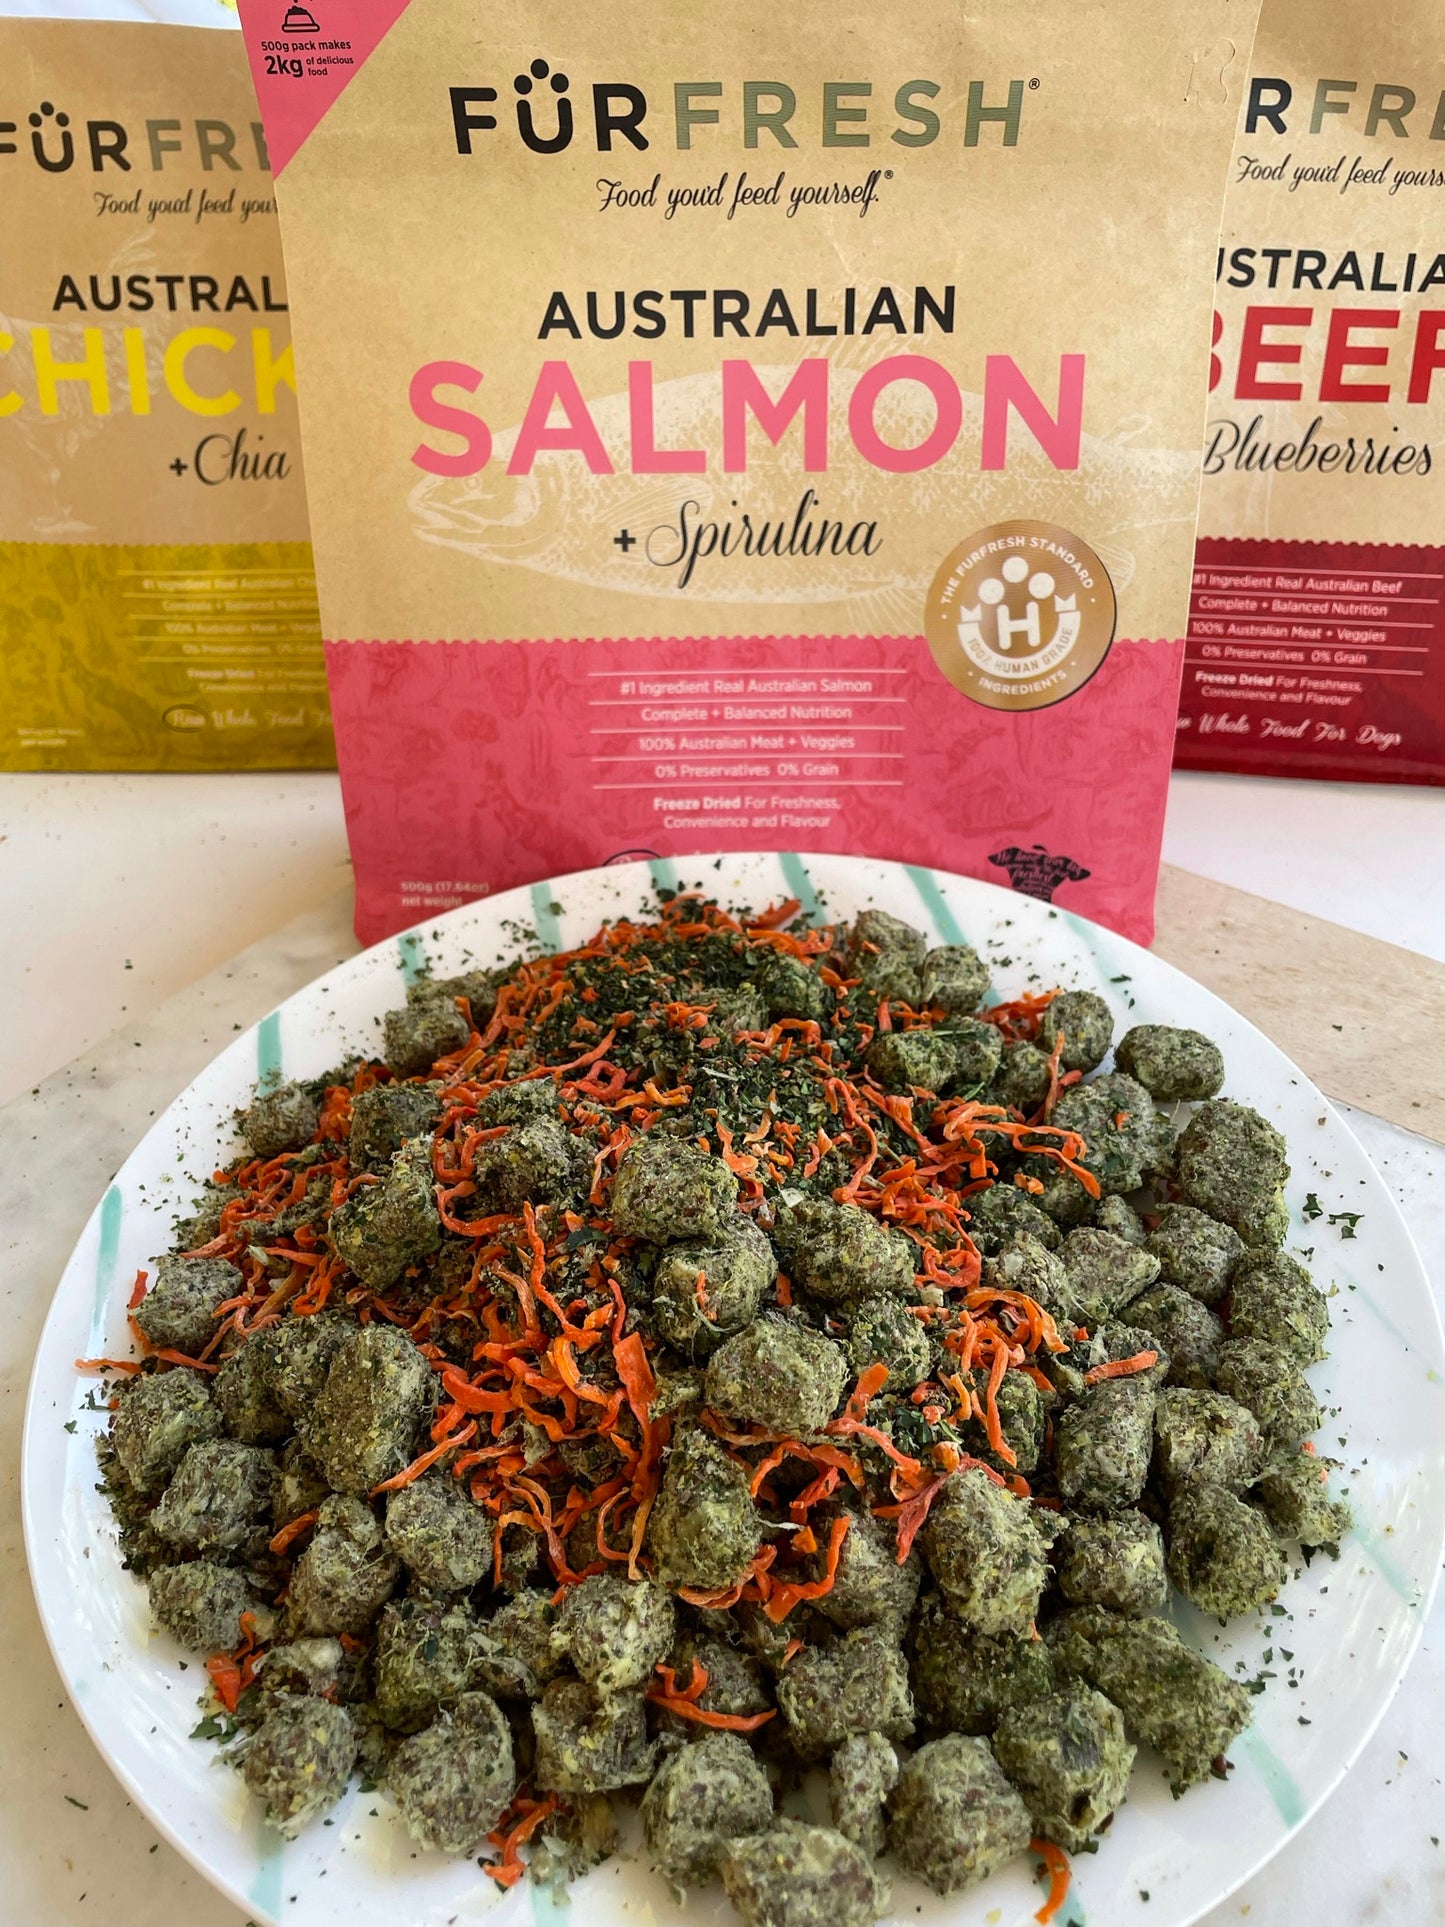 Australian Salmon + Spirulina Freeze Dried Daily Dog Food